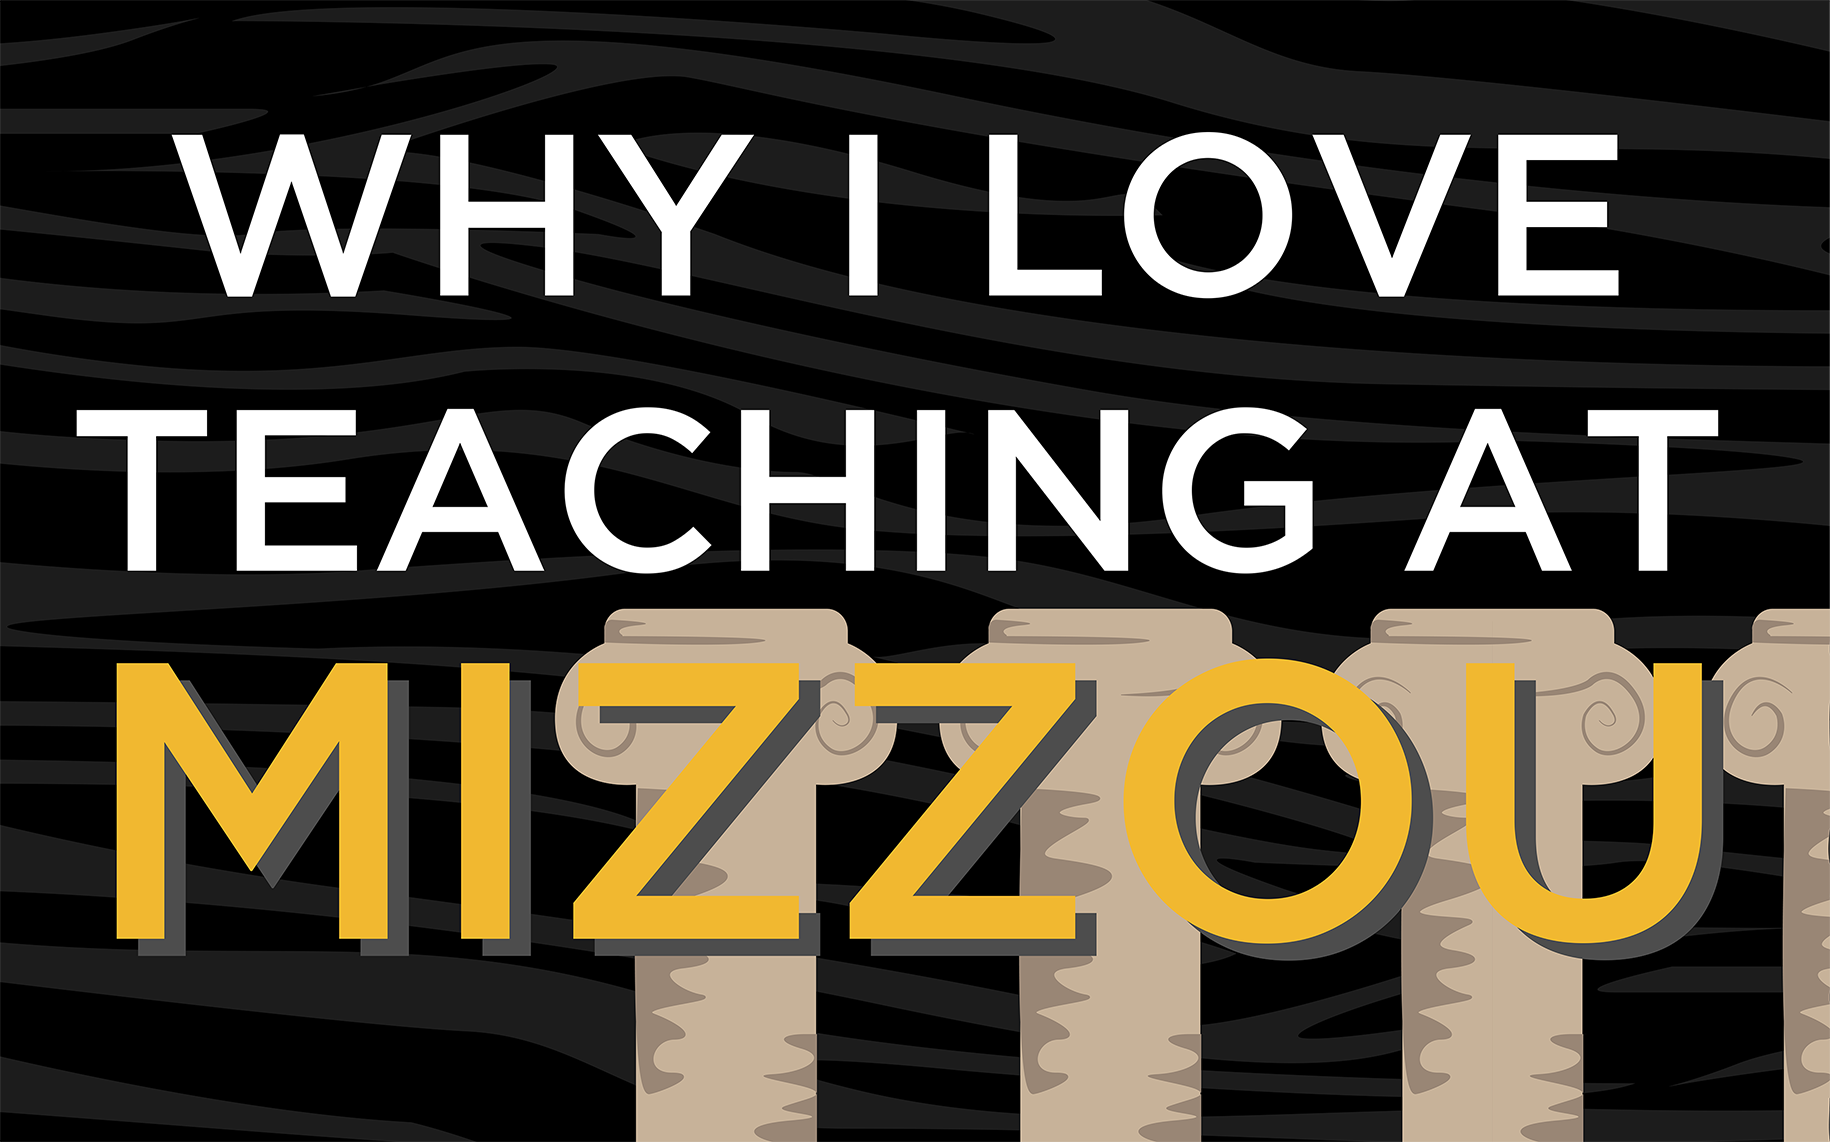 Why I love teaching at Mizzou graphic